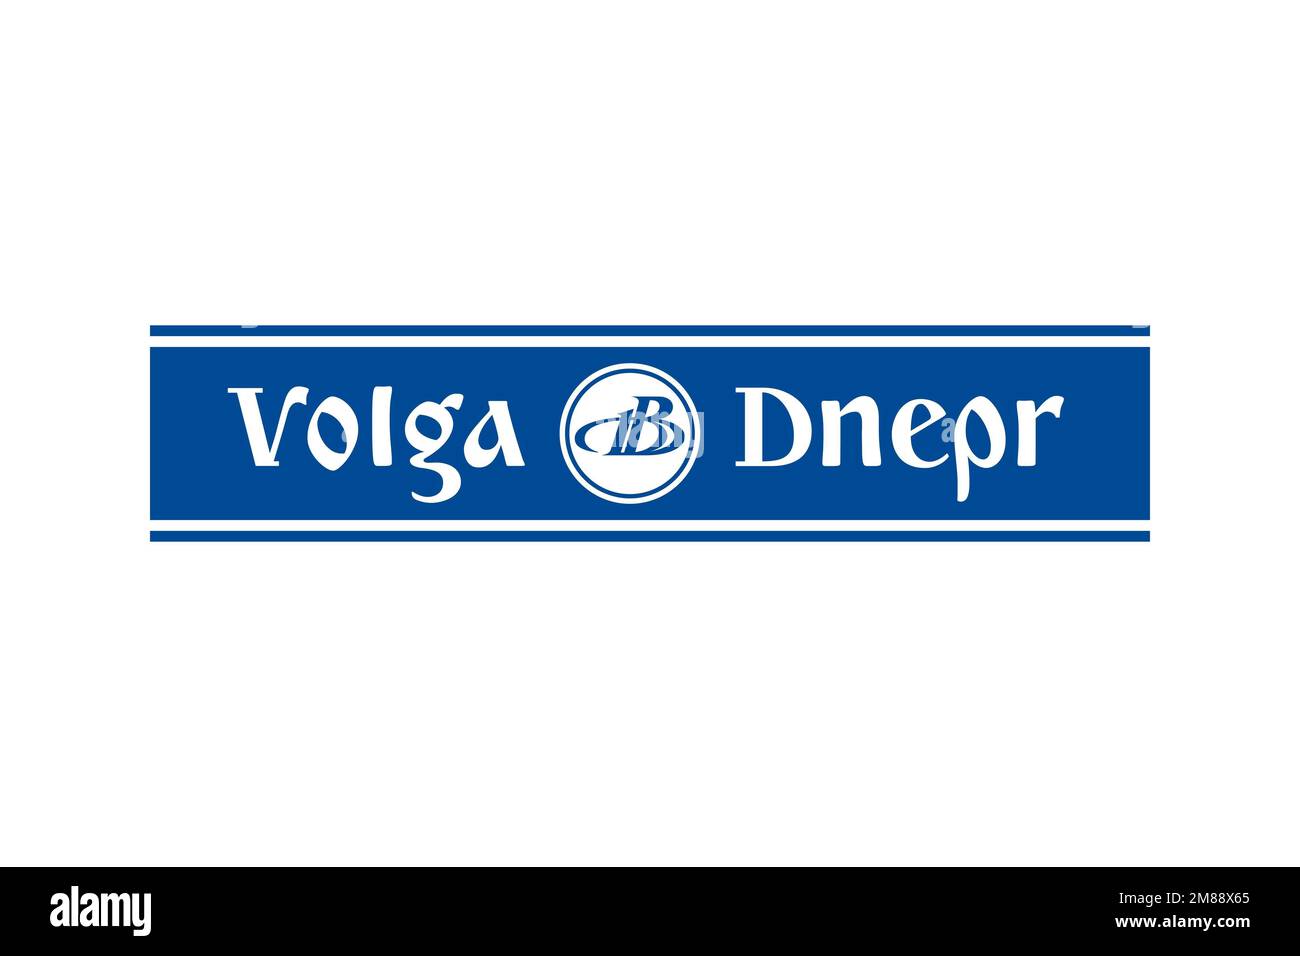 Volga Dnepr Airline, logo, fond blanc Banque D'Images